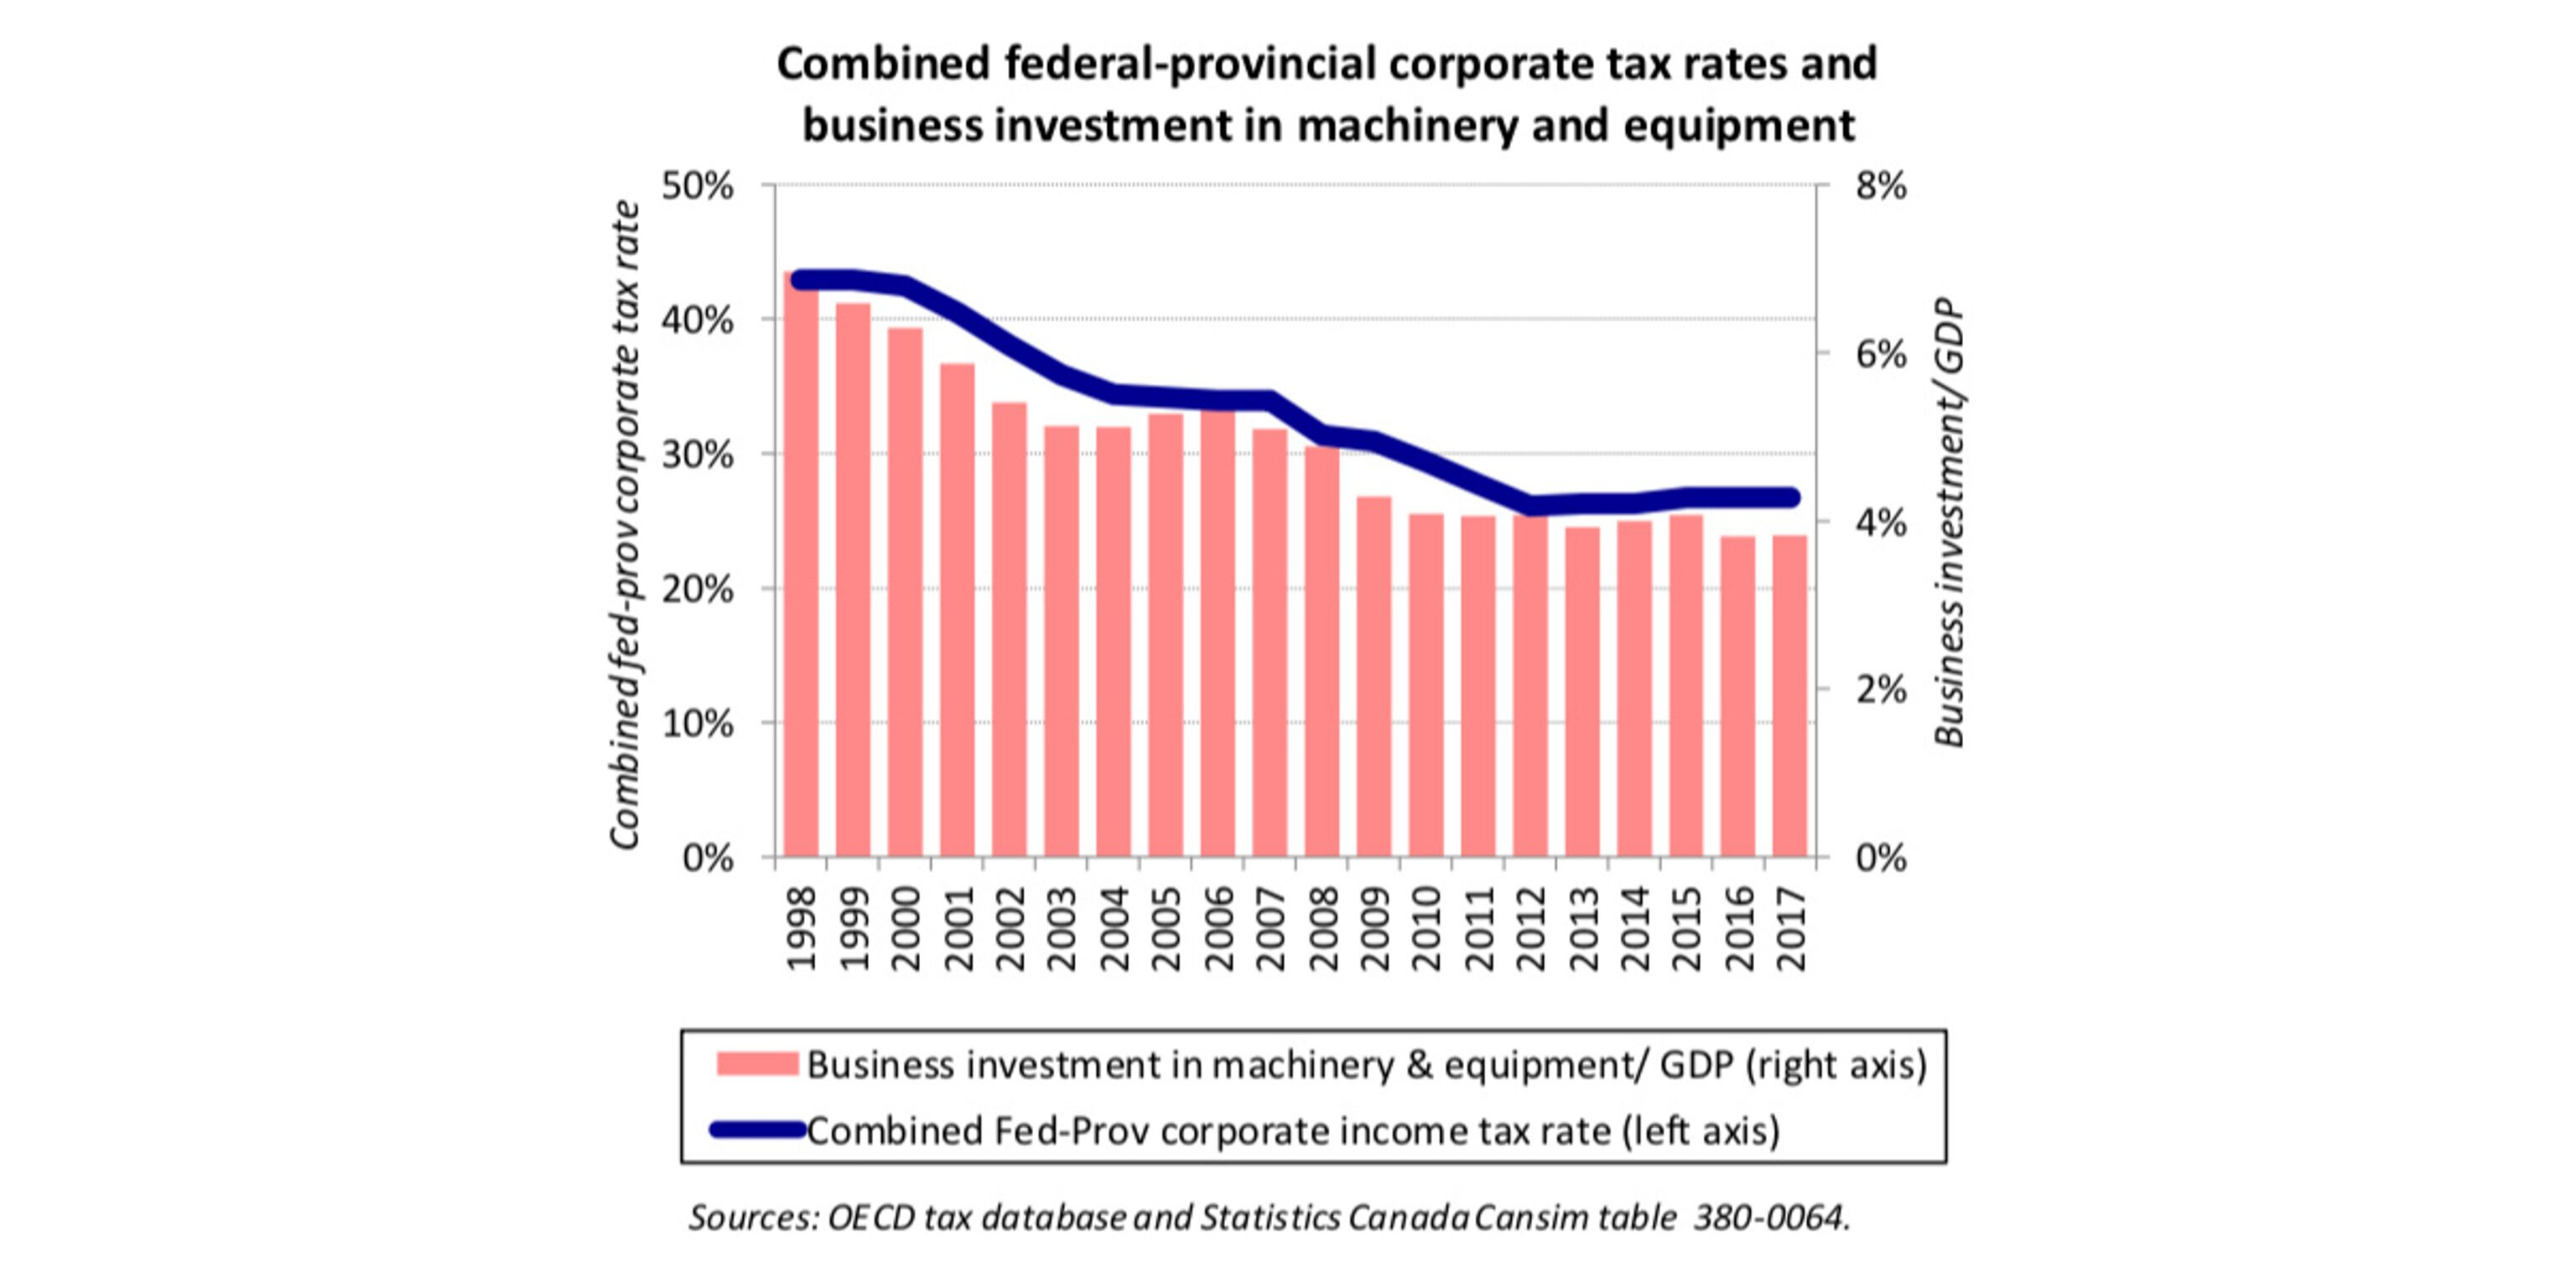 9 Lower corporate tax